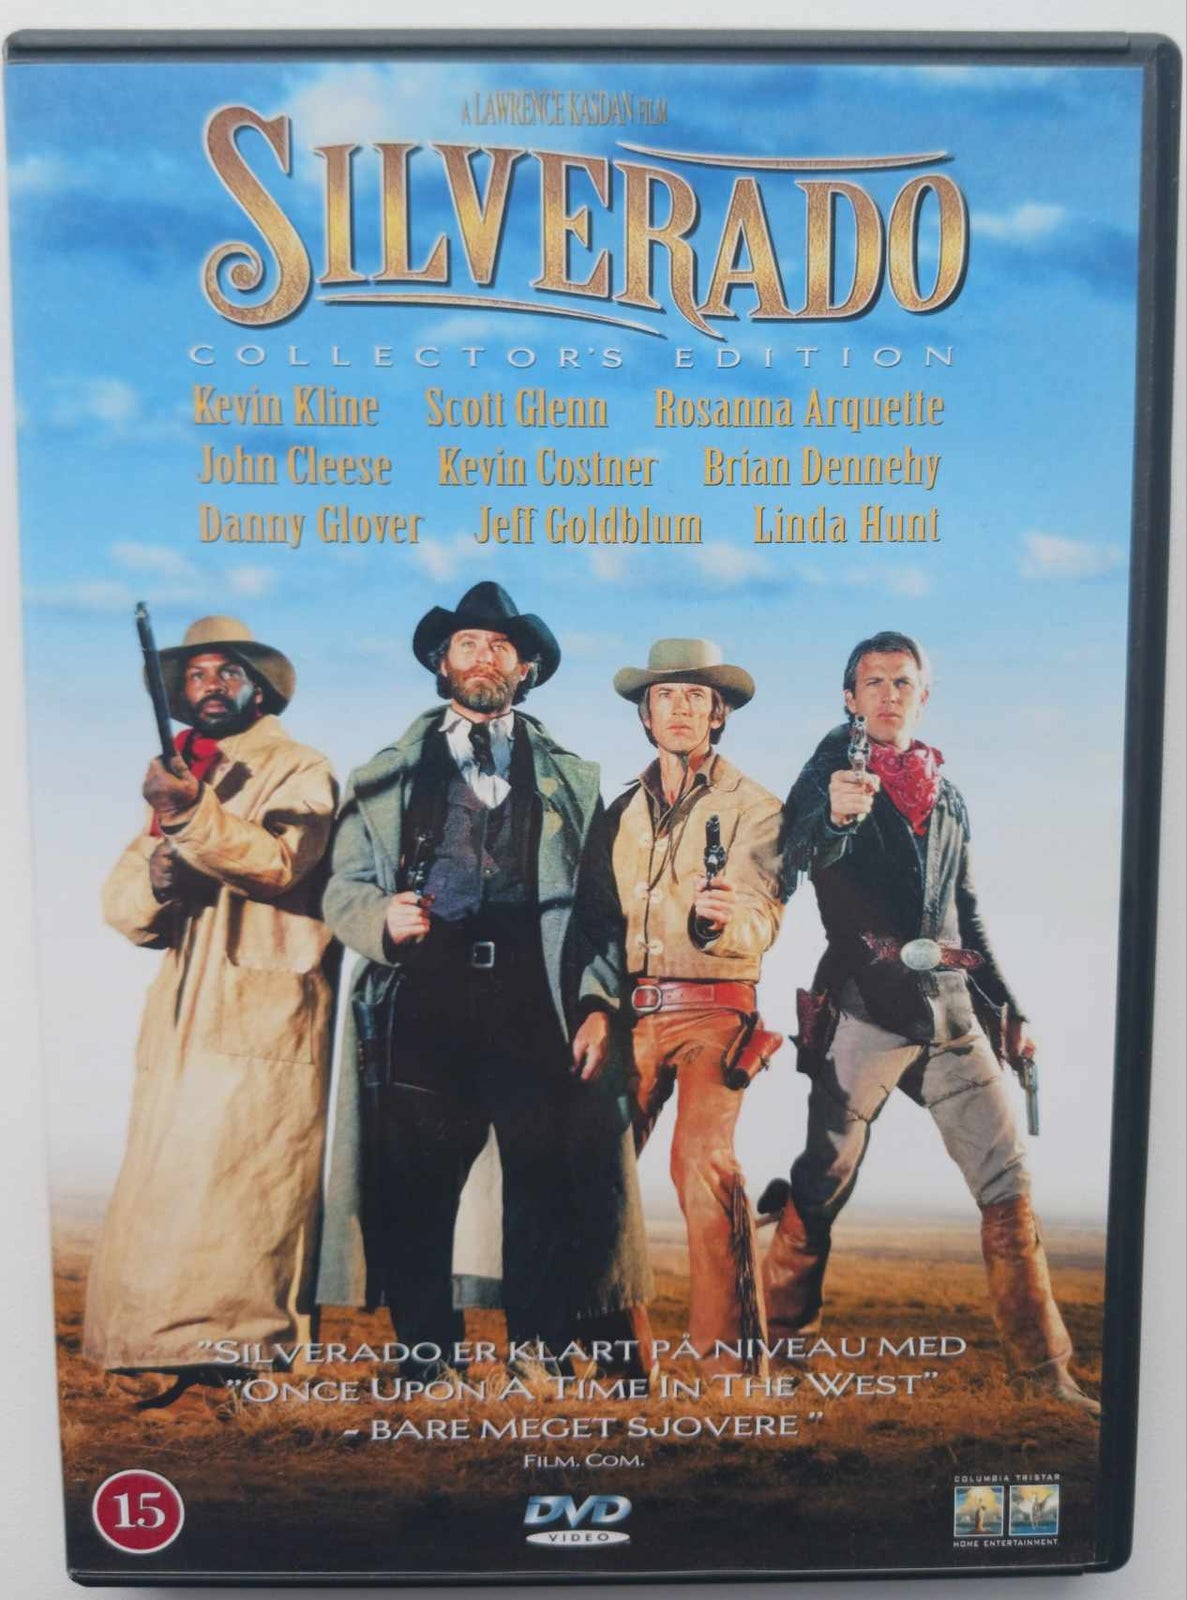 Silverado (Collector's Edition), instruktør Lawrence